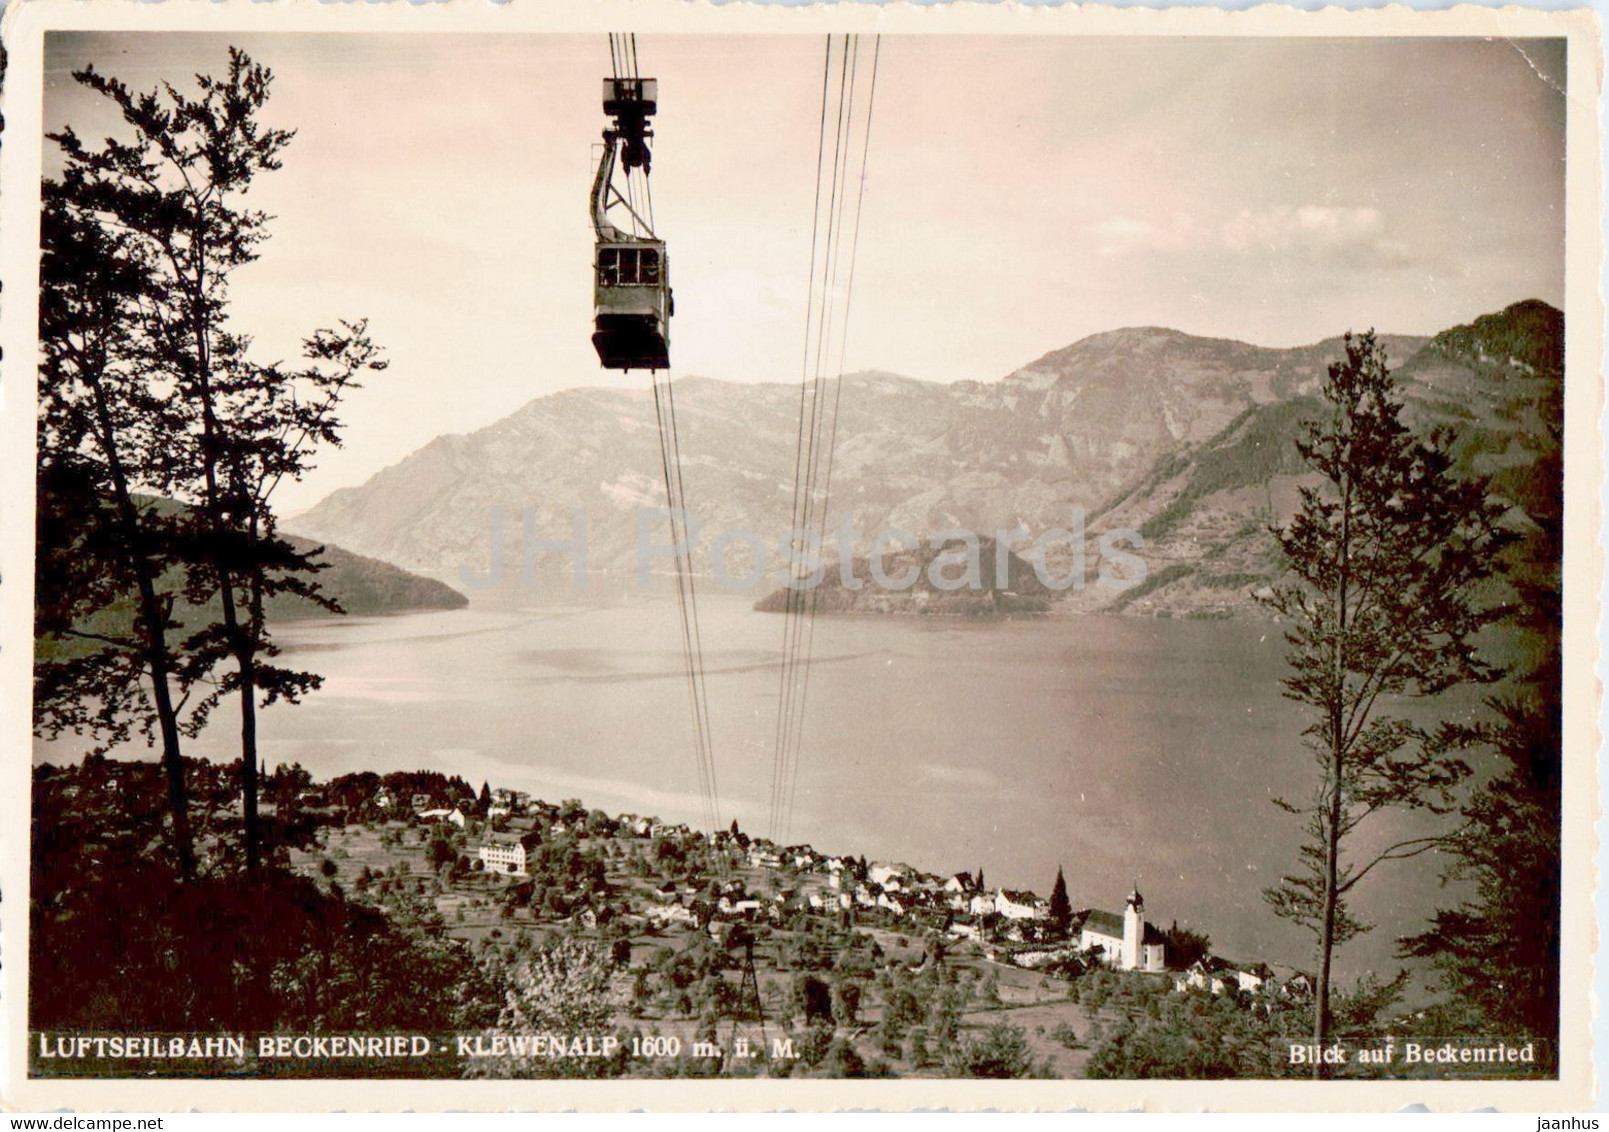 Luftseilbahn Beckenried Klewenalp 1600 M - Cable Car - 3397 - Old Postcard - Switzerland - Unused - Beckenried